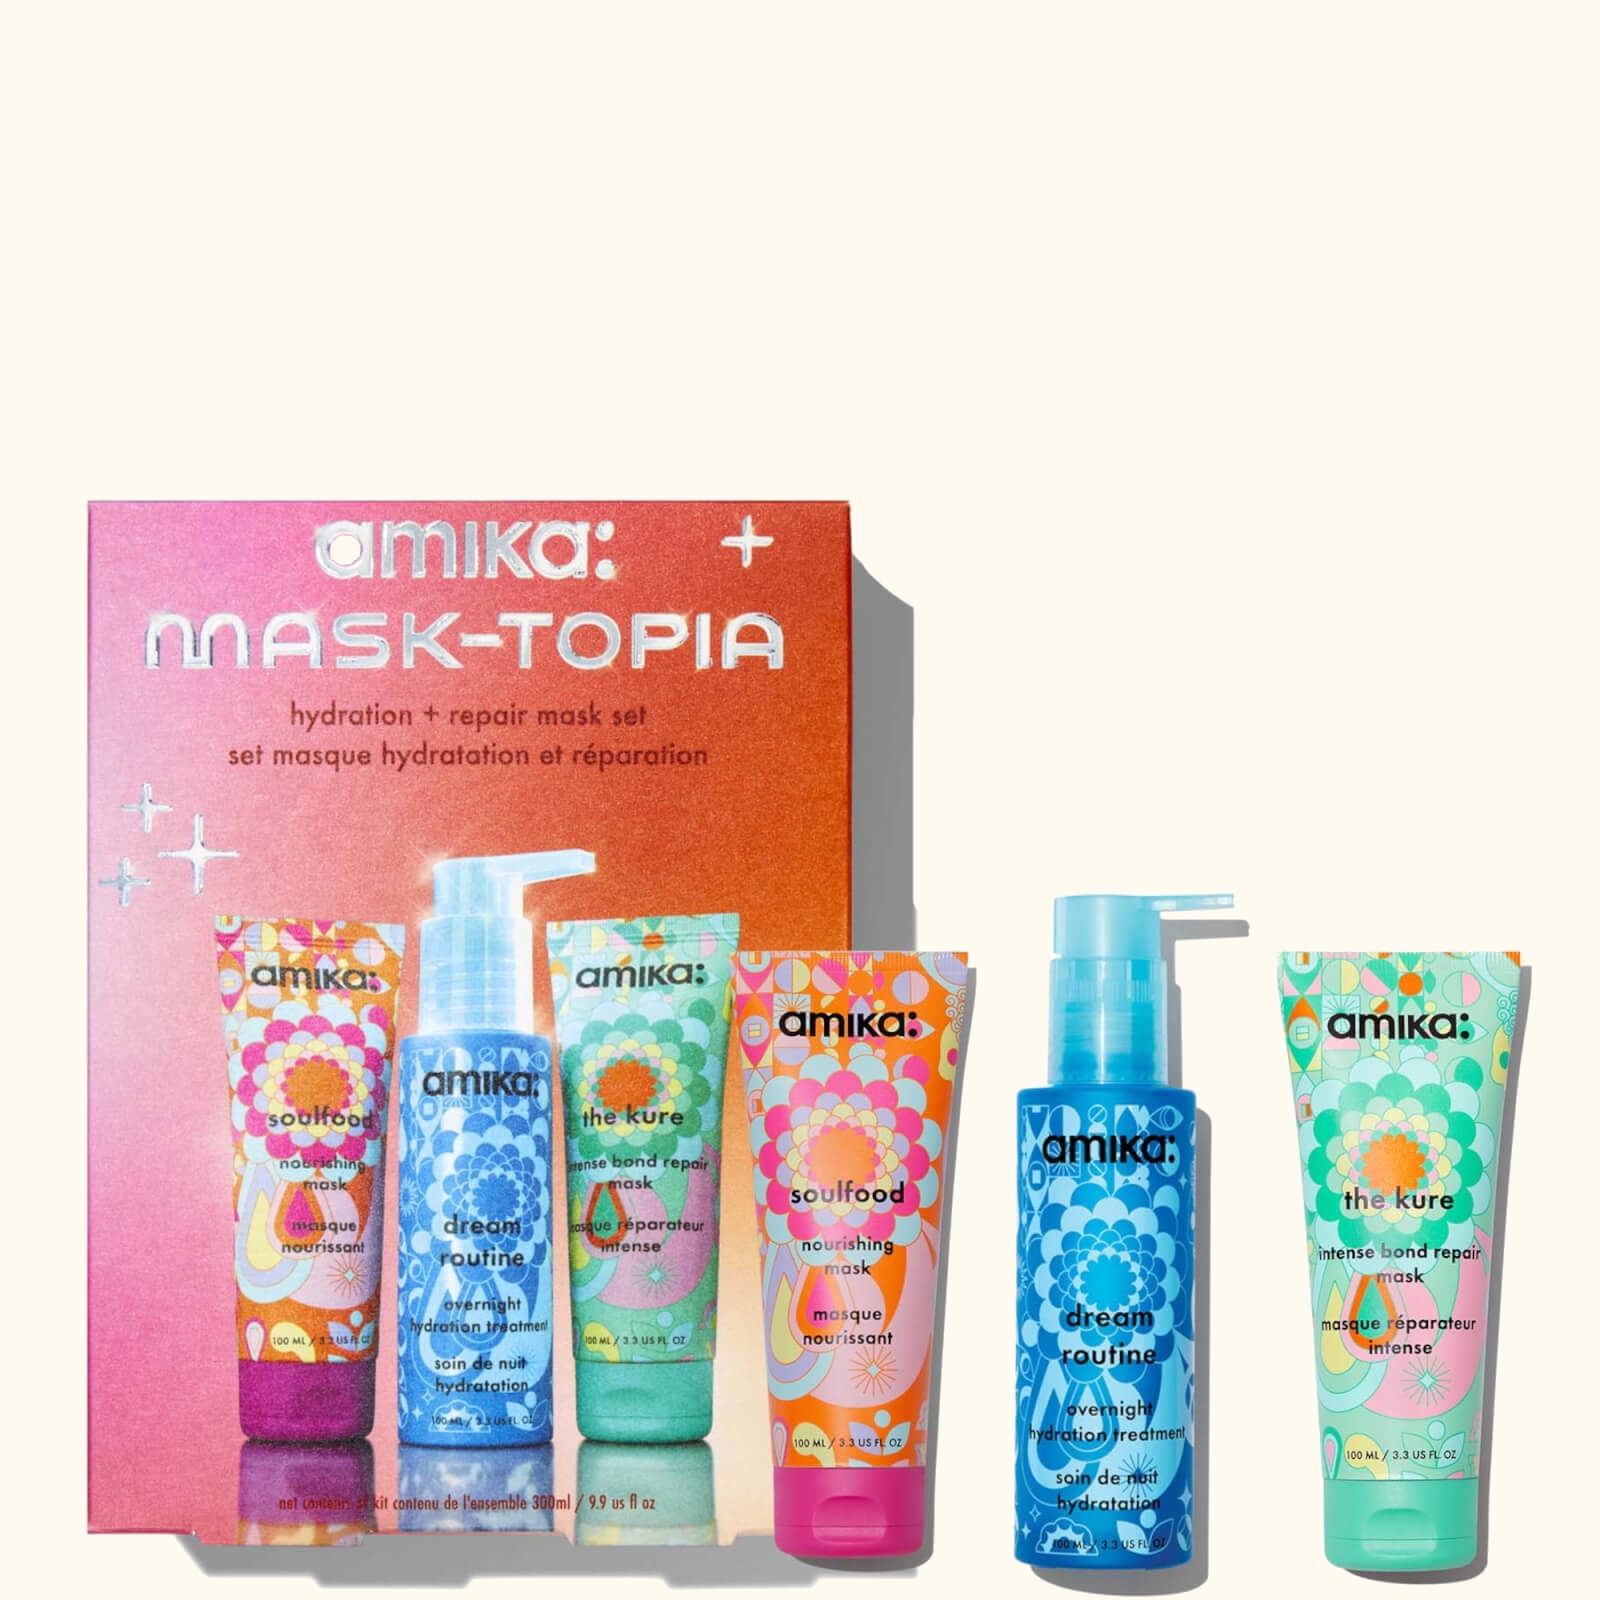 Photos - Hair Product Amika mask-topia hydration + repair set  AM41.20044 (35 savings)